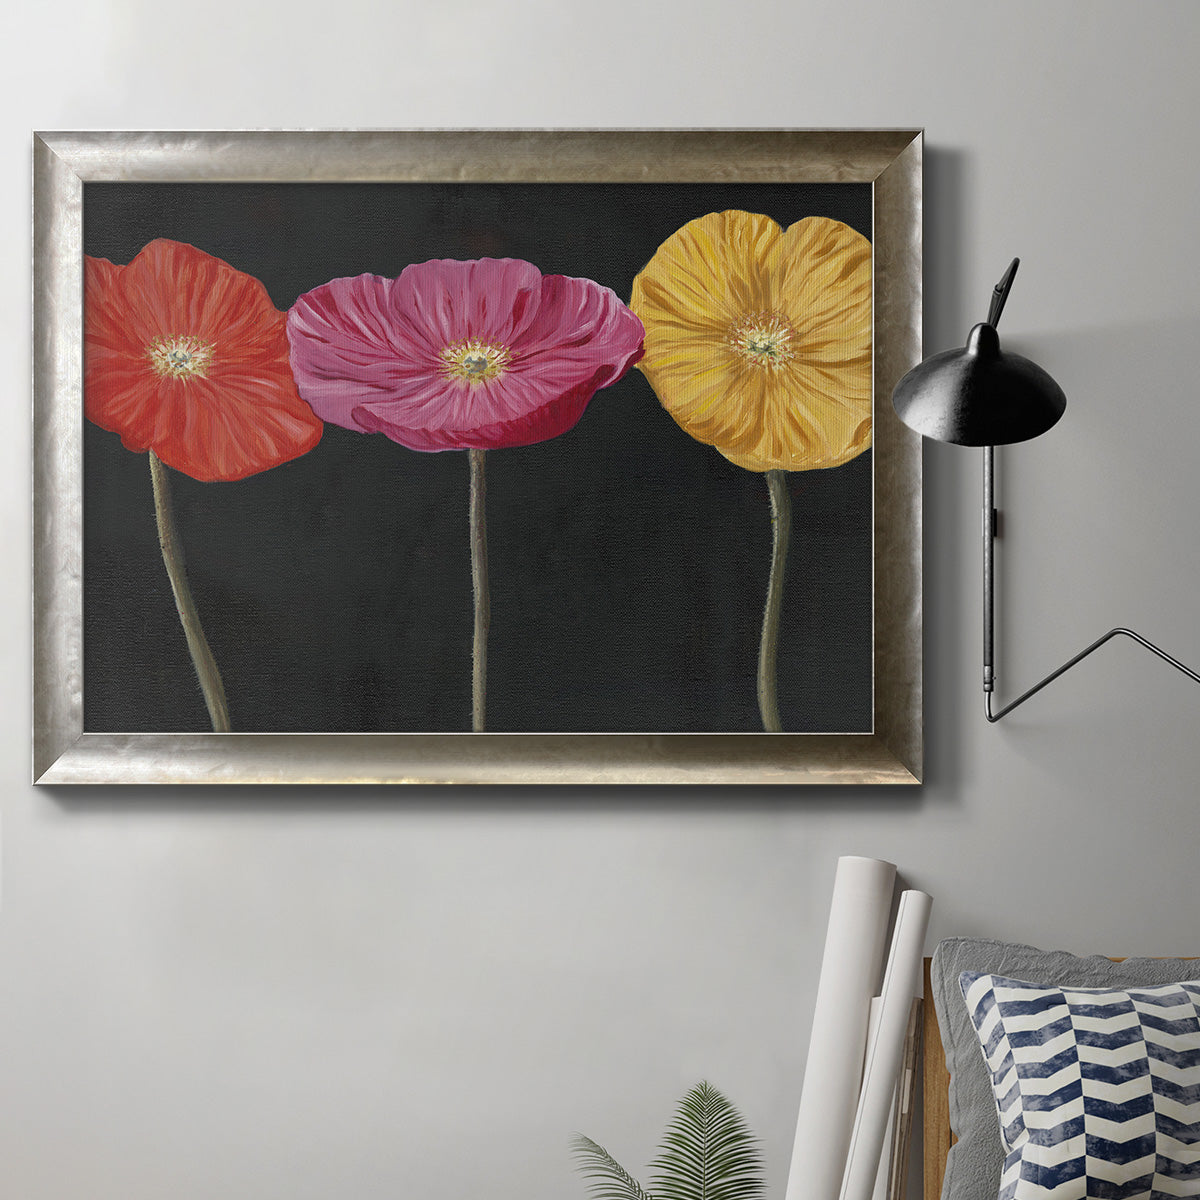 Poppy Trio II Premium Framed Canvas- Ready to Hang